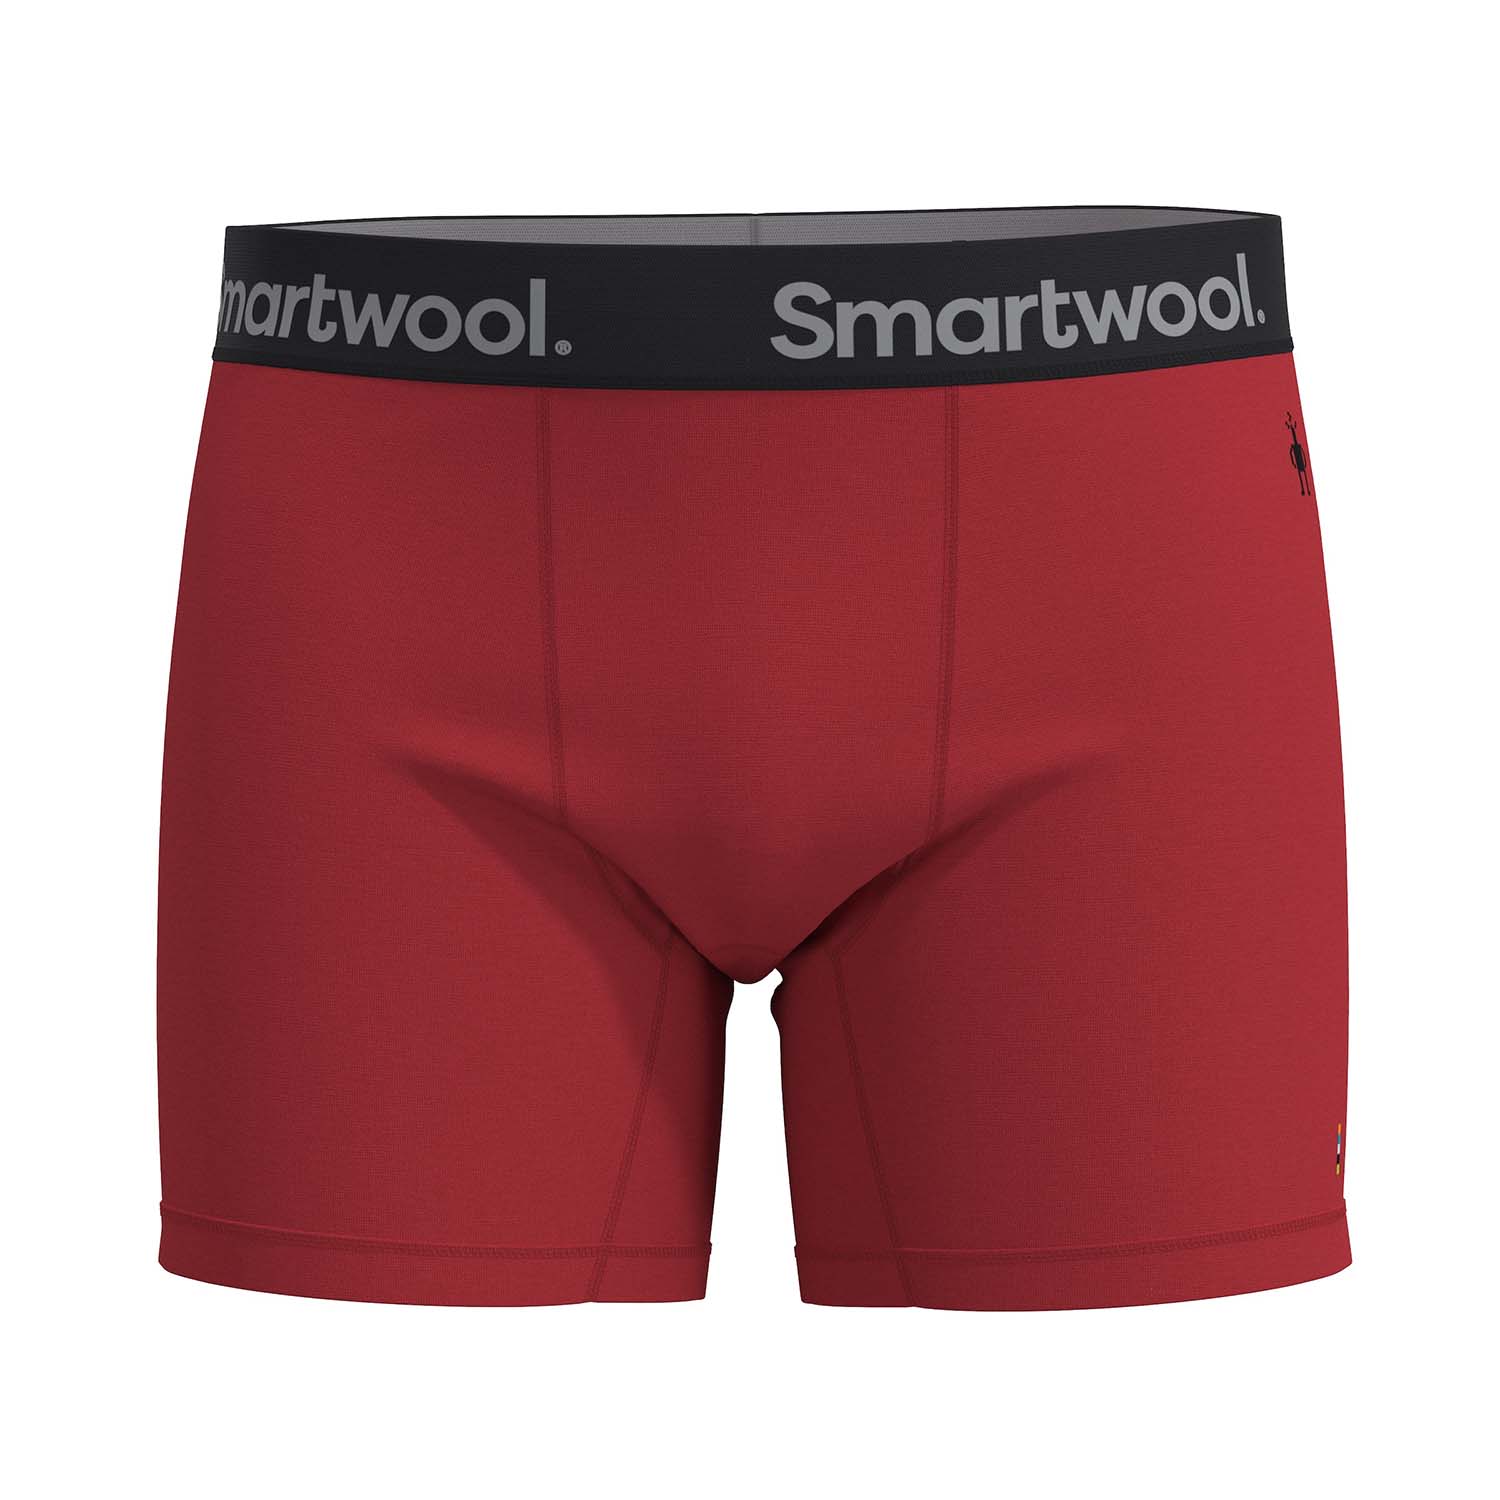 Smartwool - Merino 150 Boxer Brief - Men's